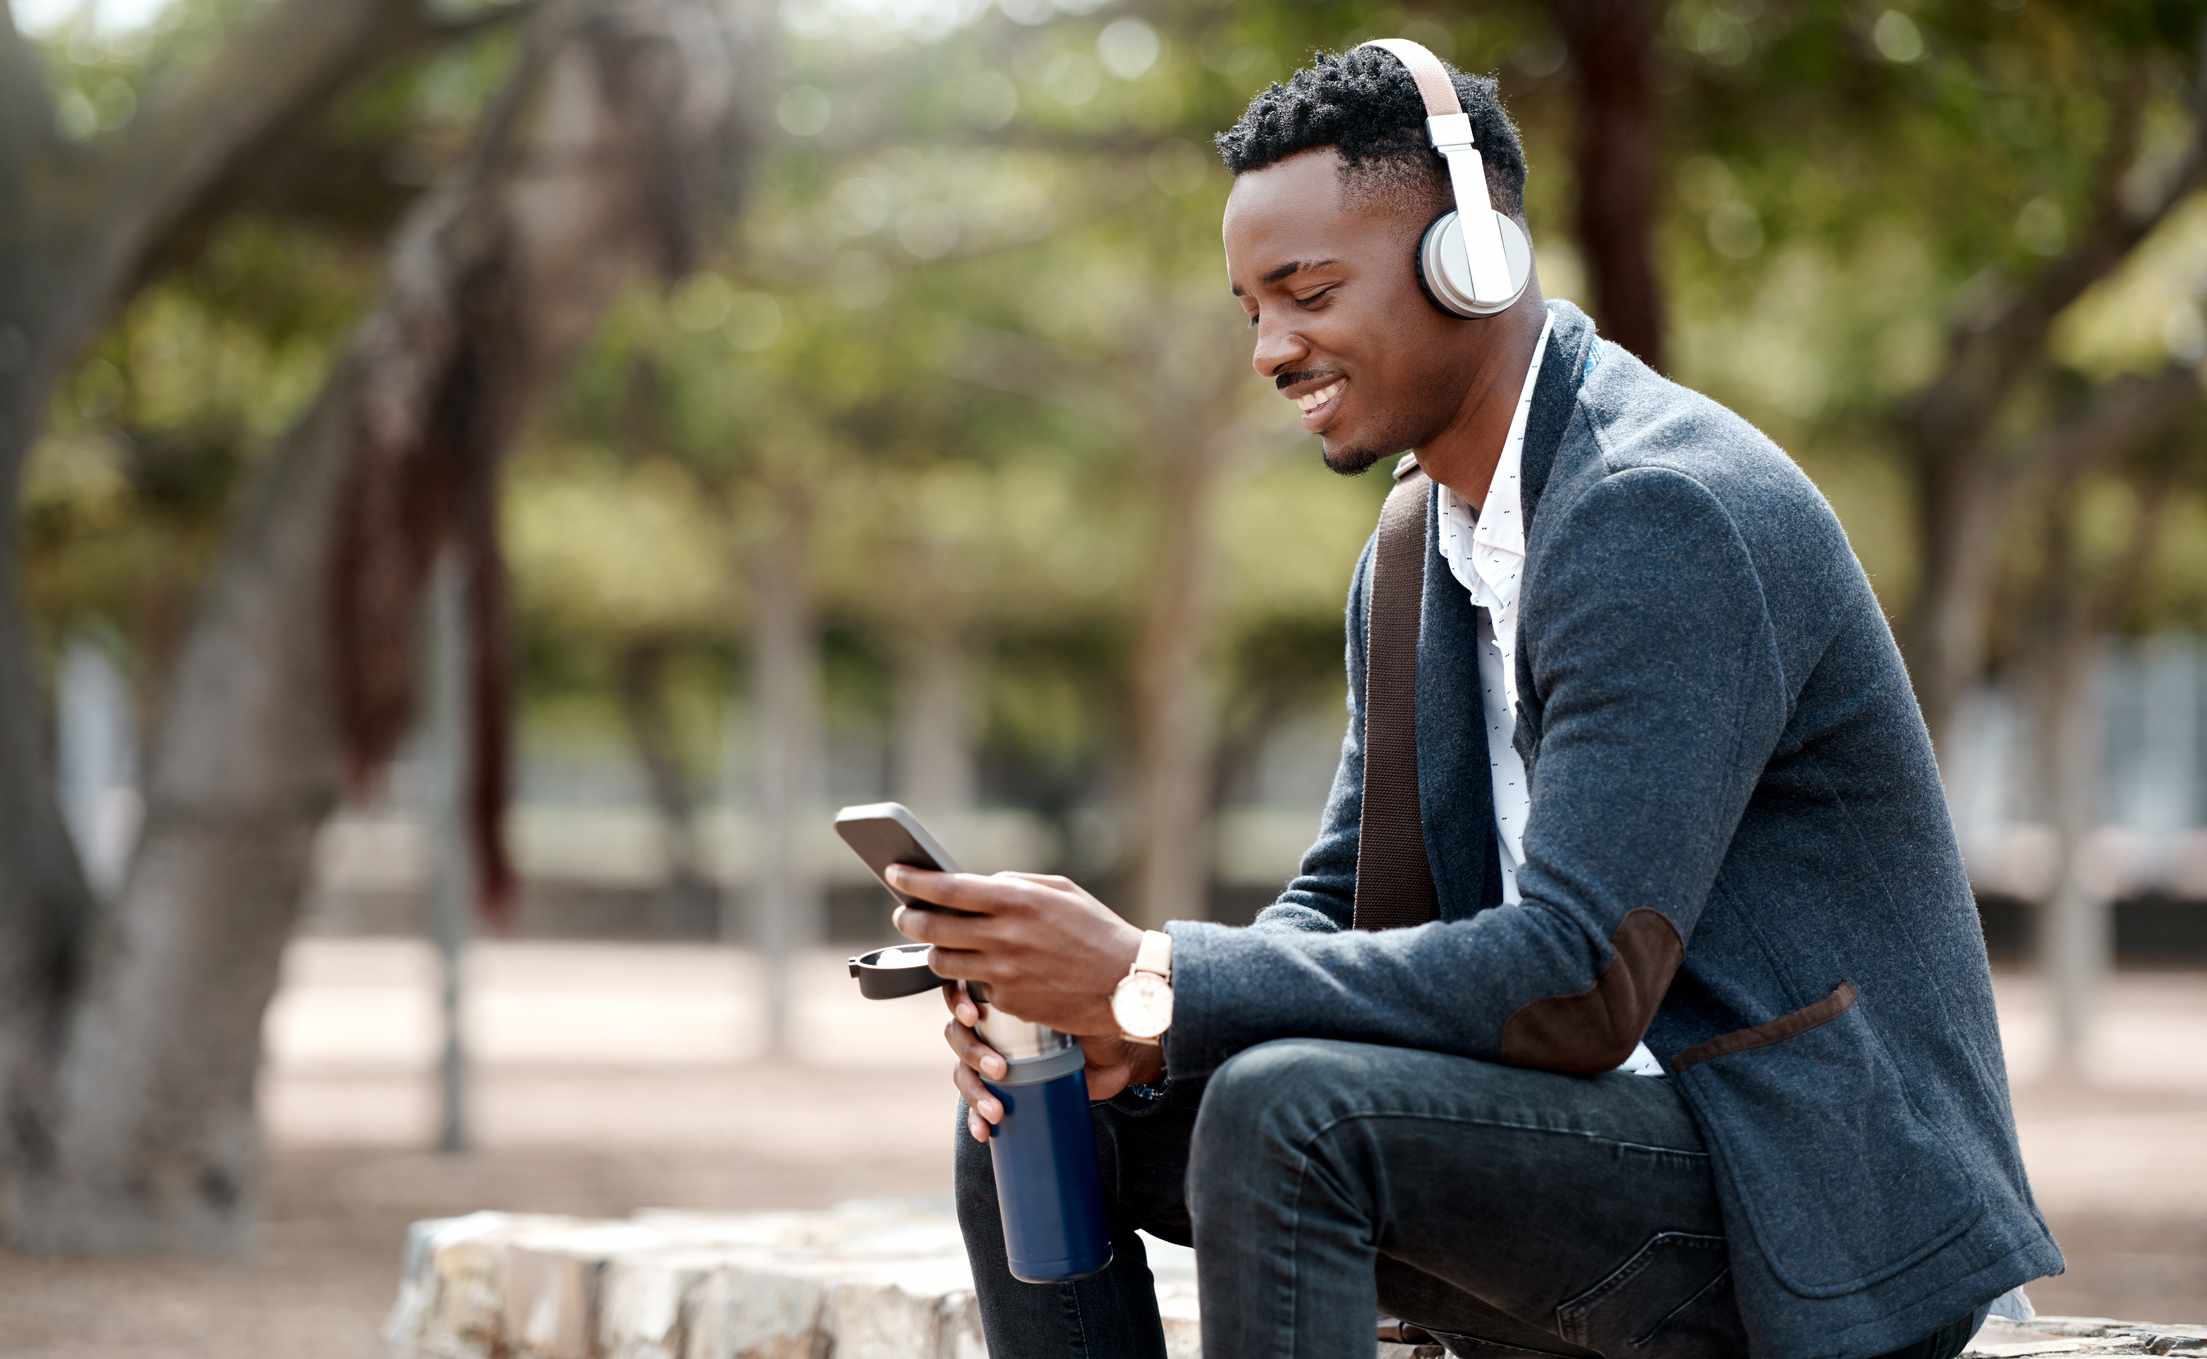 Headphones Connectivity: Connecting Bluetooth Headphones To Phone